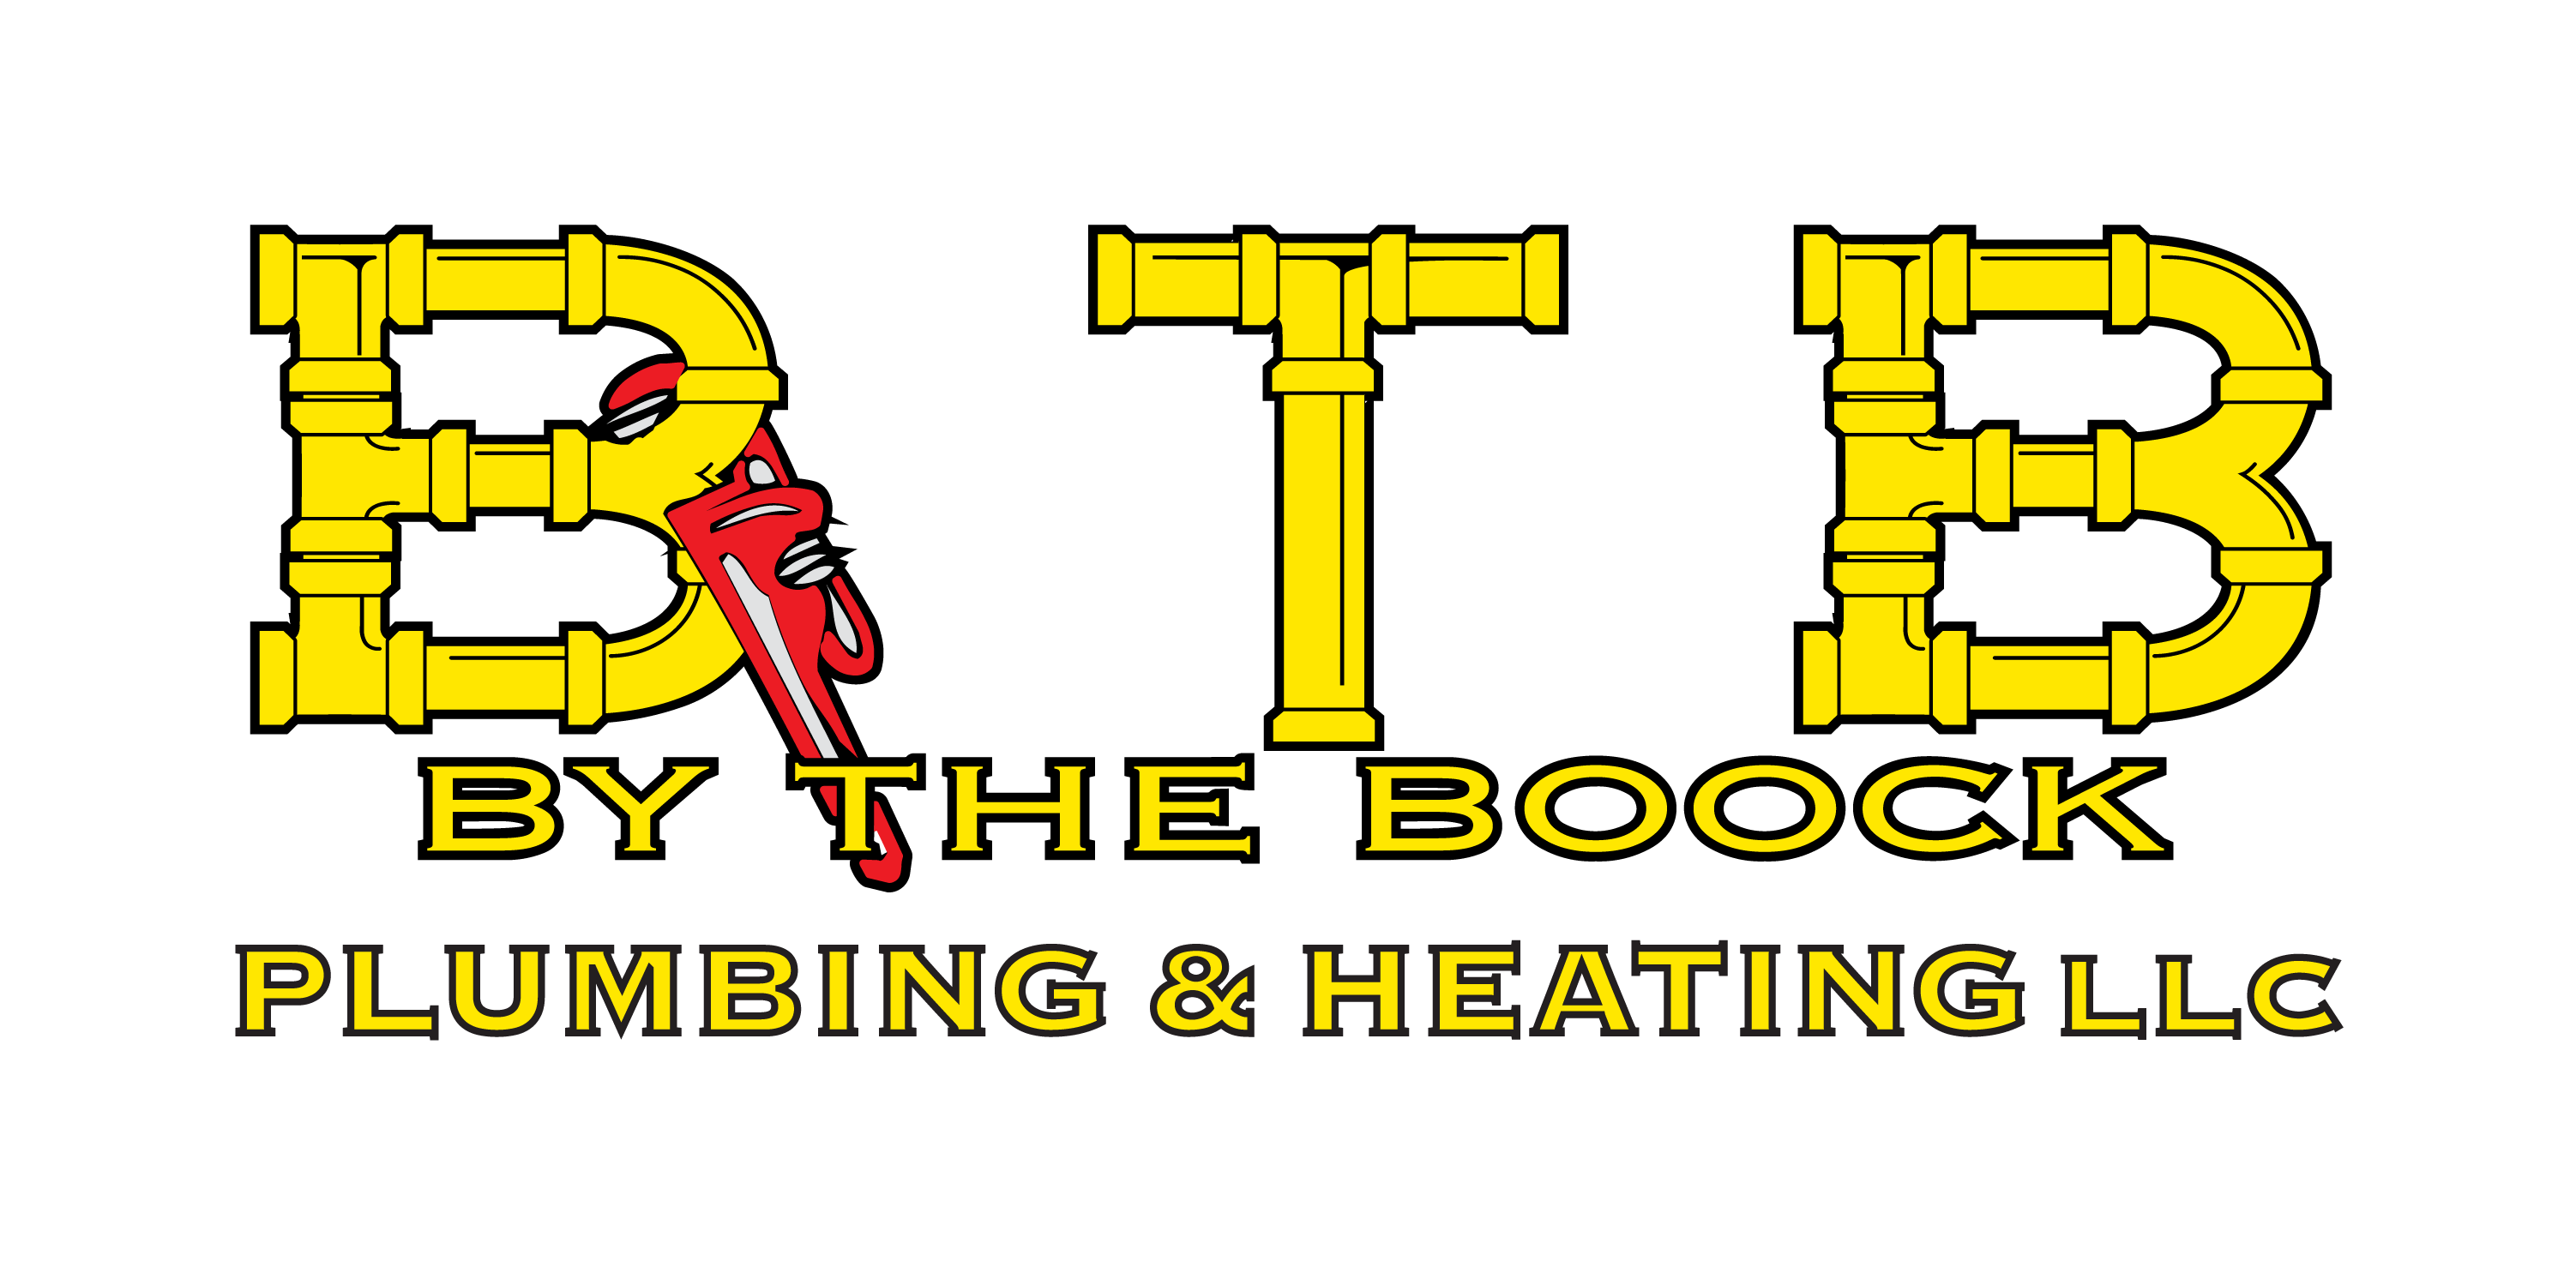 By the Boock Plumbing & Heating, LLC